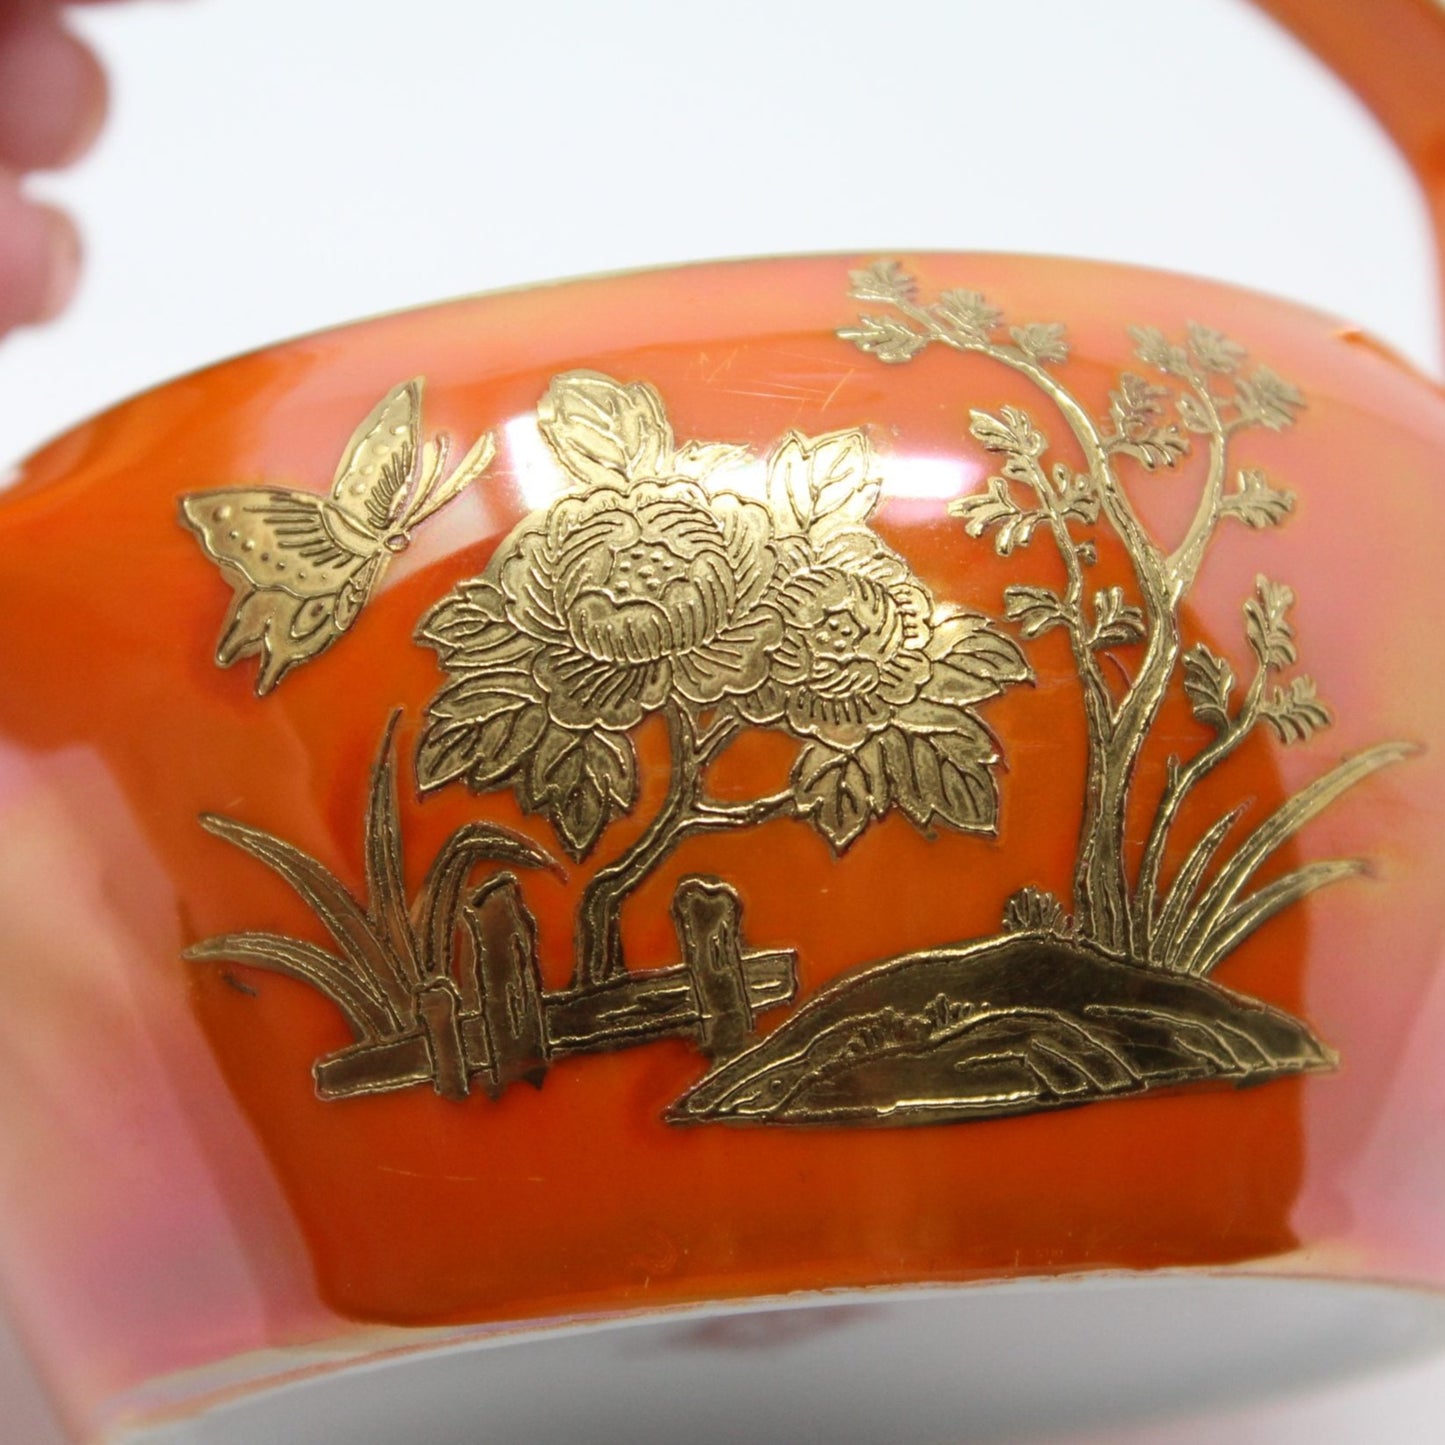 Condiment Jar, Noritake Jam / Jelly Jar, Iridescent Lusterware Gold Encrusted, Vintage